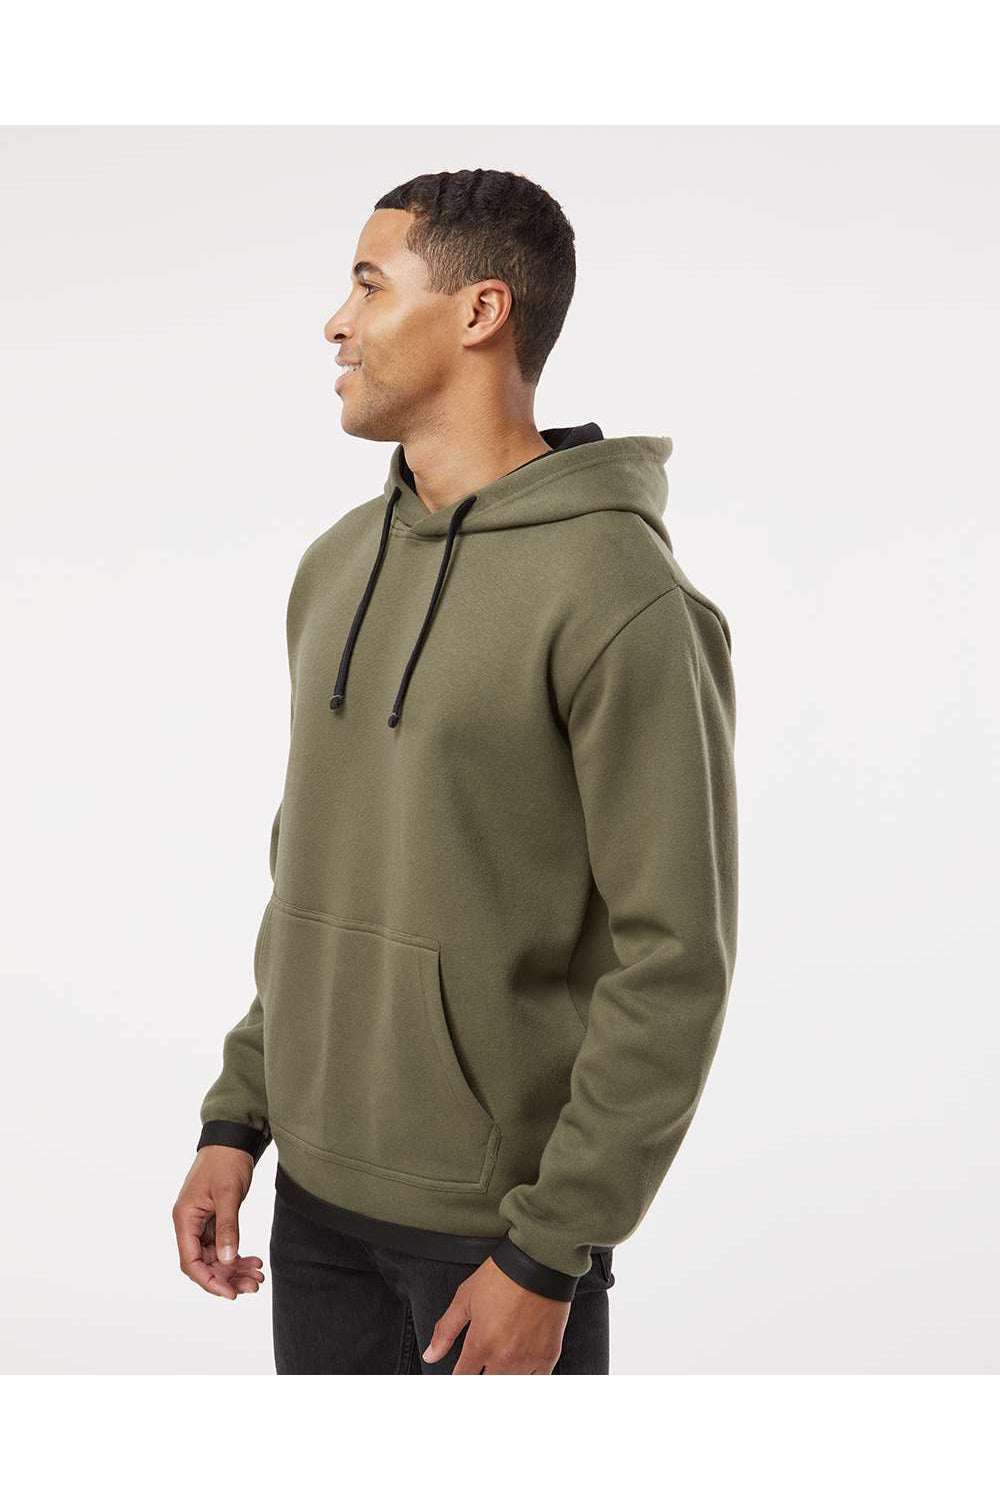 LAT 6996 Mens The Statement Fleece Hooded Sweatshirt Hoodie Military Green/Black Model Side